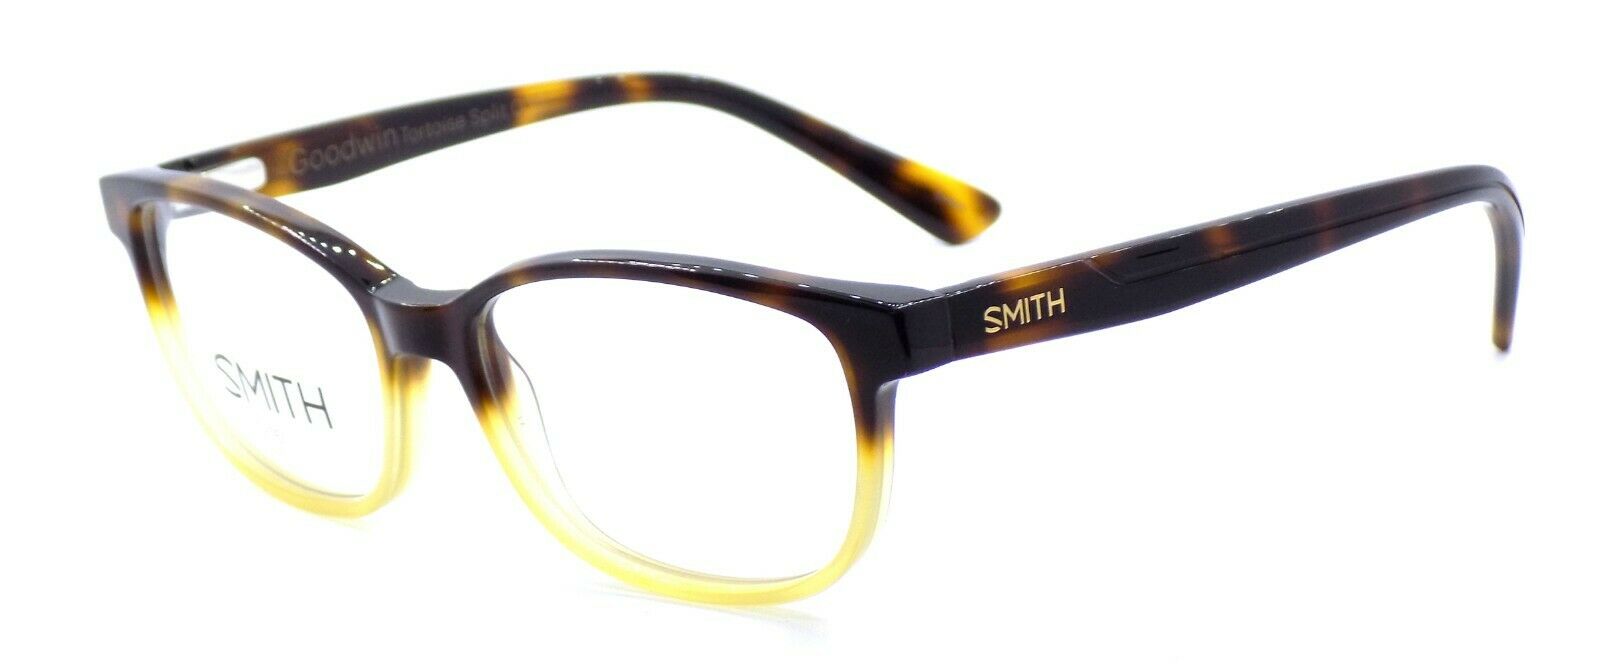 1-SMITH Optics Goodwin G36 Women's Eyeglasses Frames 51-15-130 Tortoise Split-716737723074-IKSpecs